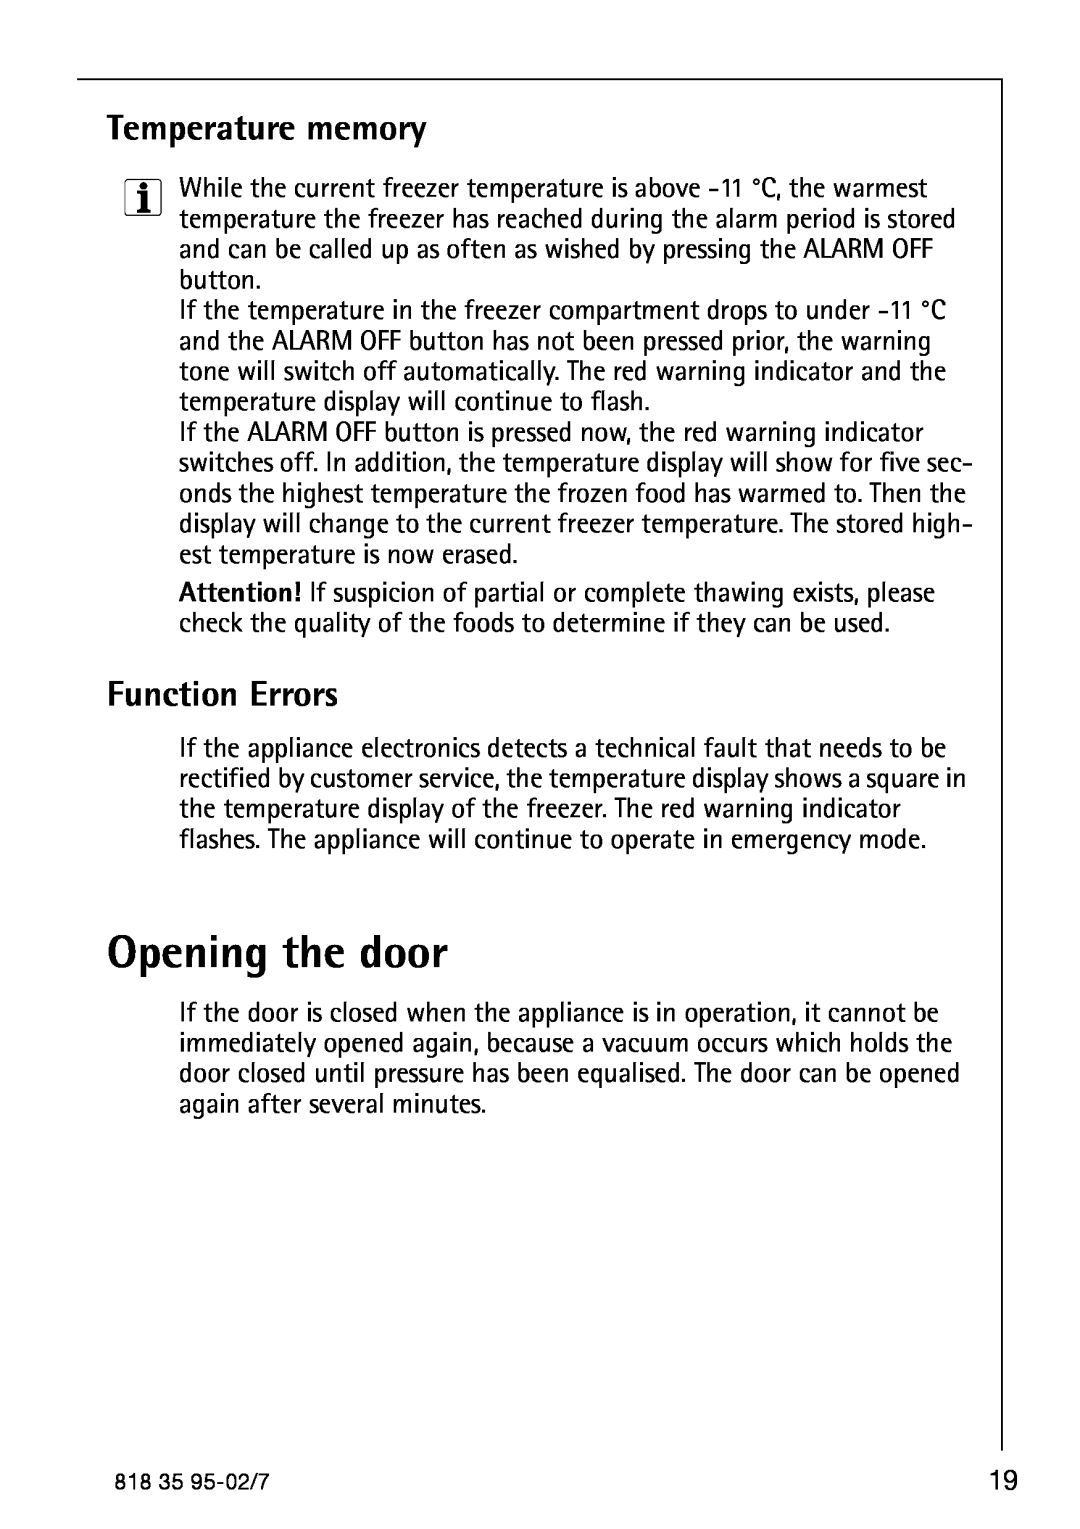 AEG S75578KG3 manual Temperature memory, Opening the door, Function Errors 